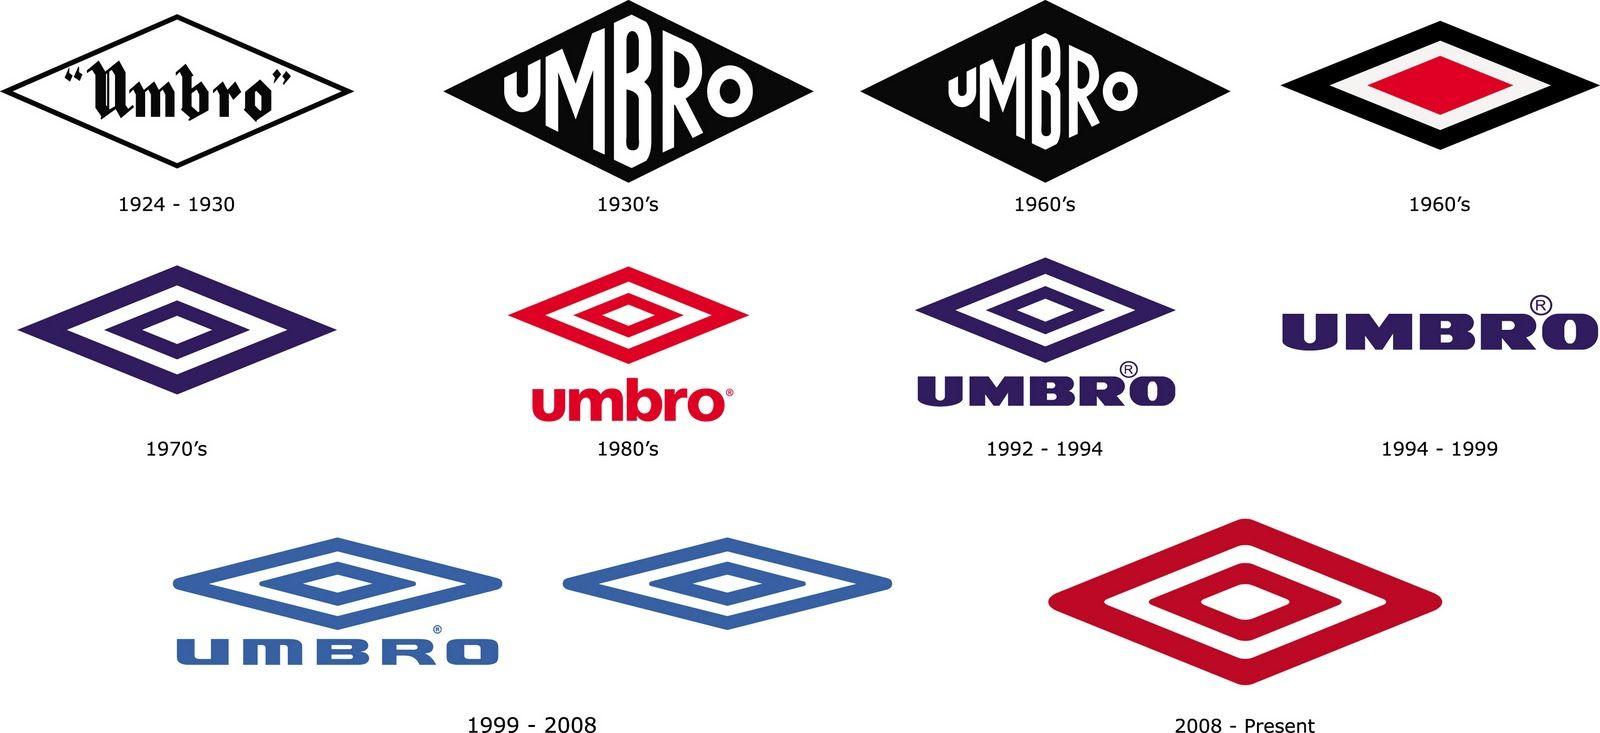 Umbro Logo - Umbro Logo Evolution | Umbro's World